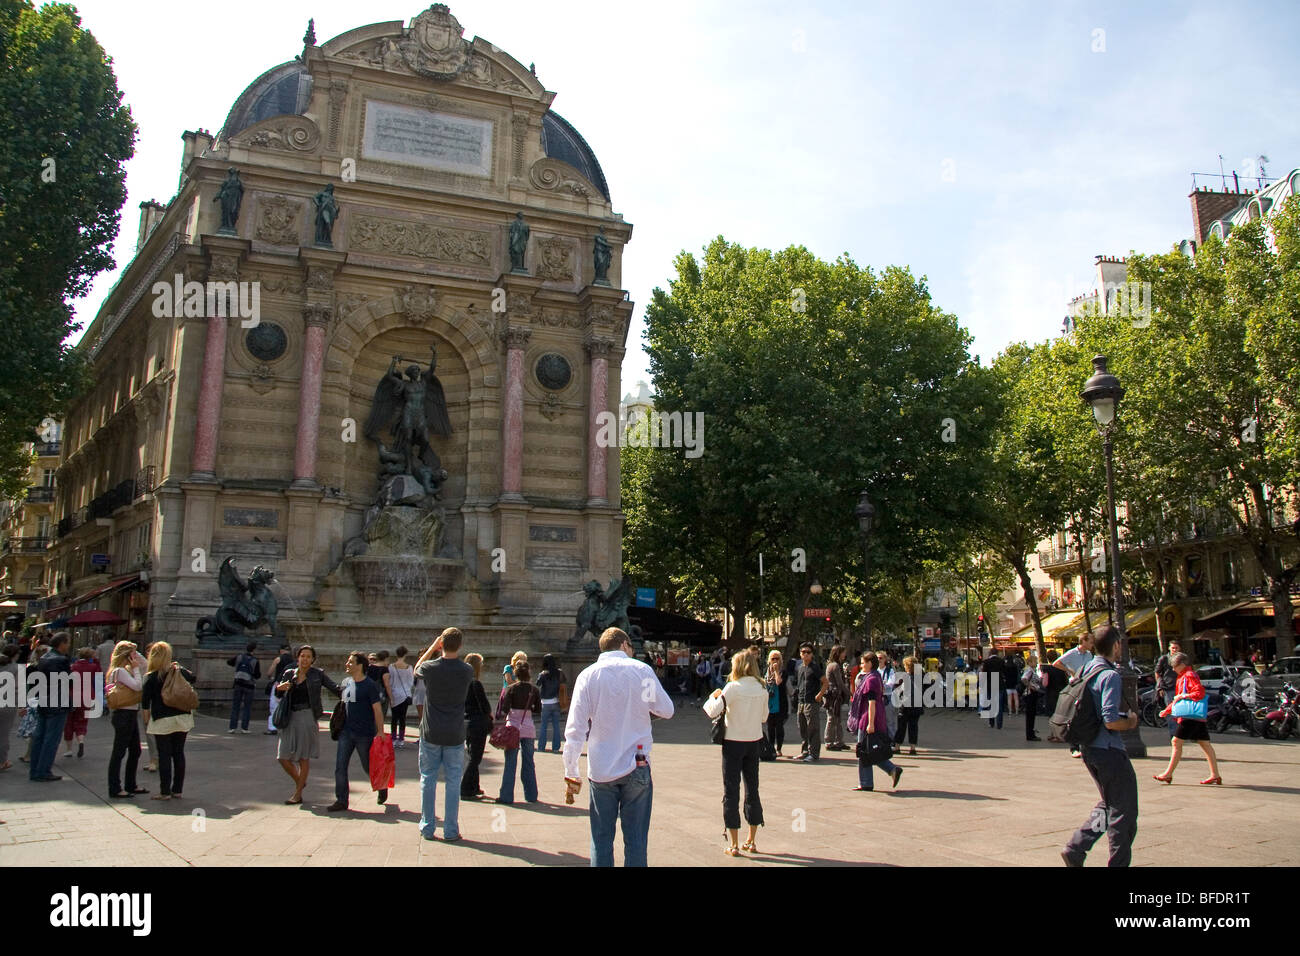 The Fontaine Saint-Michel located in the Place Saint-Michel, Paris, France. Stock Photo